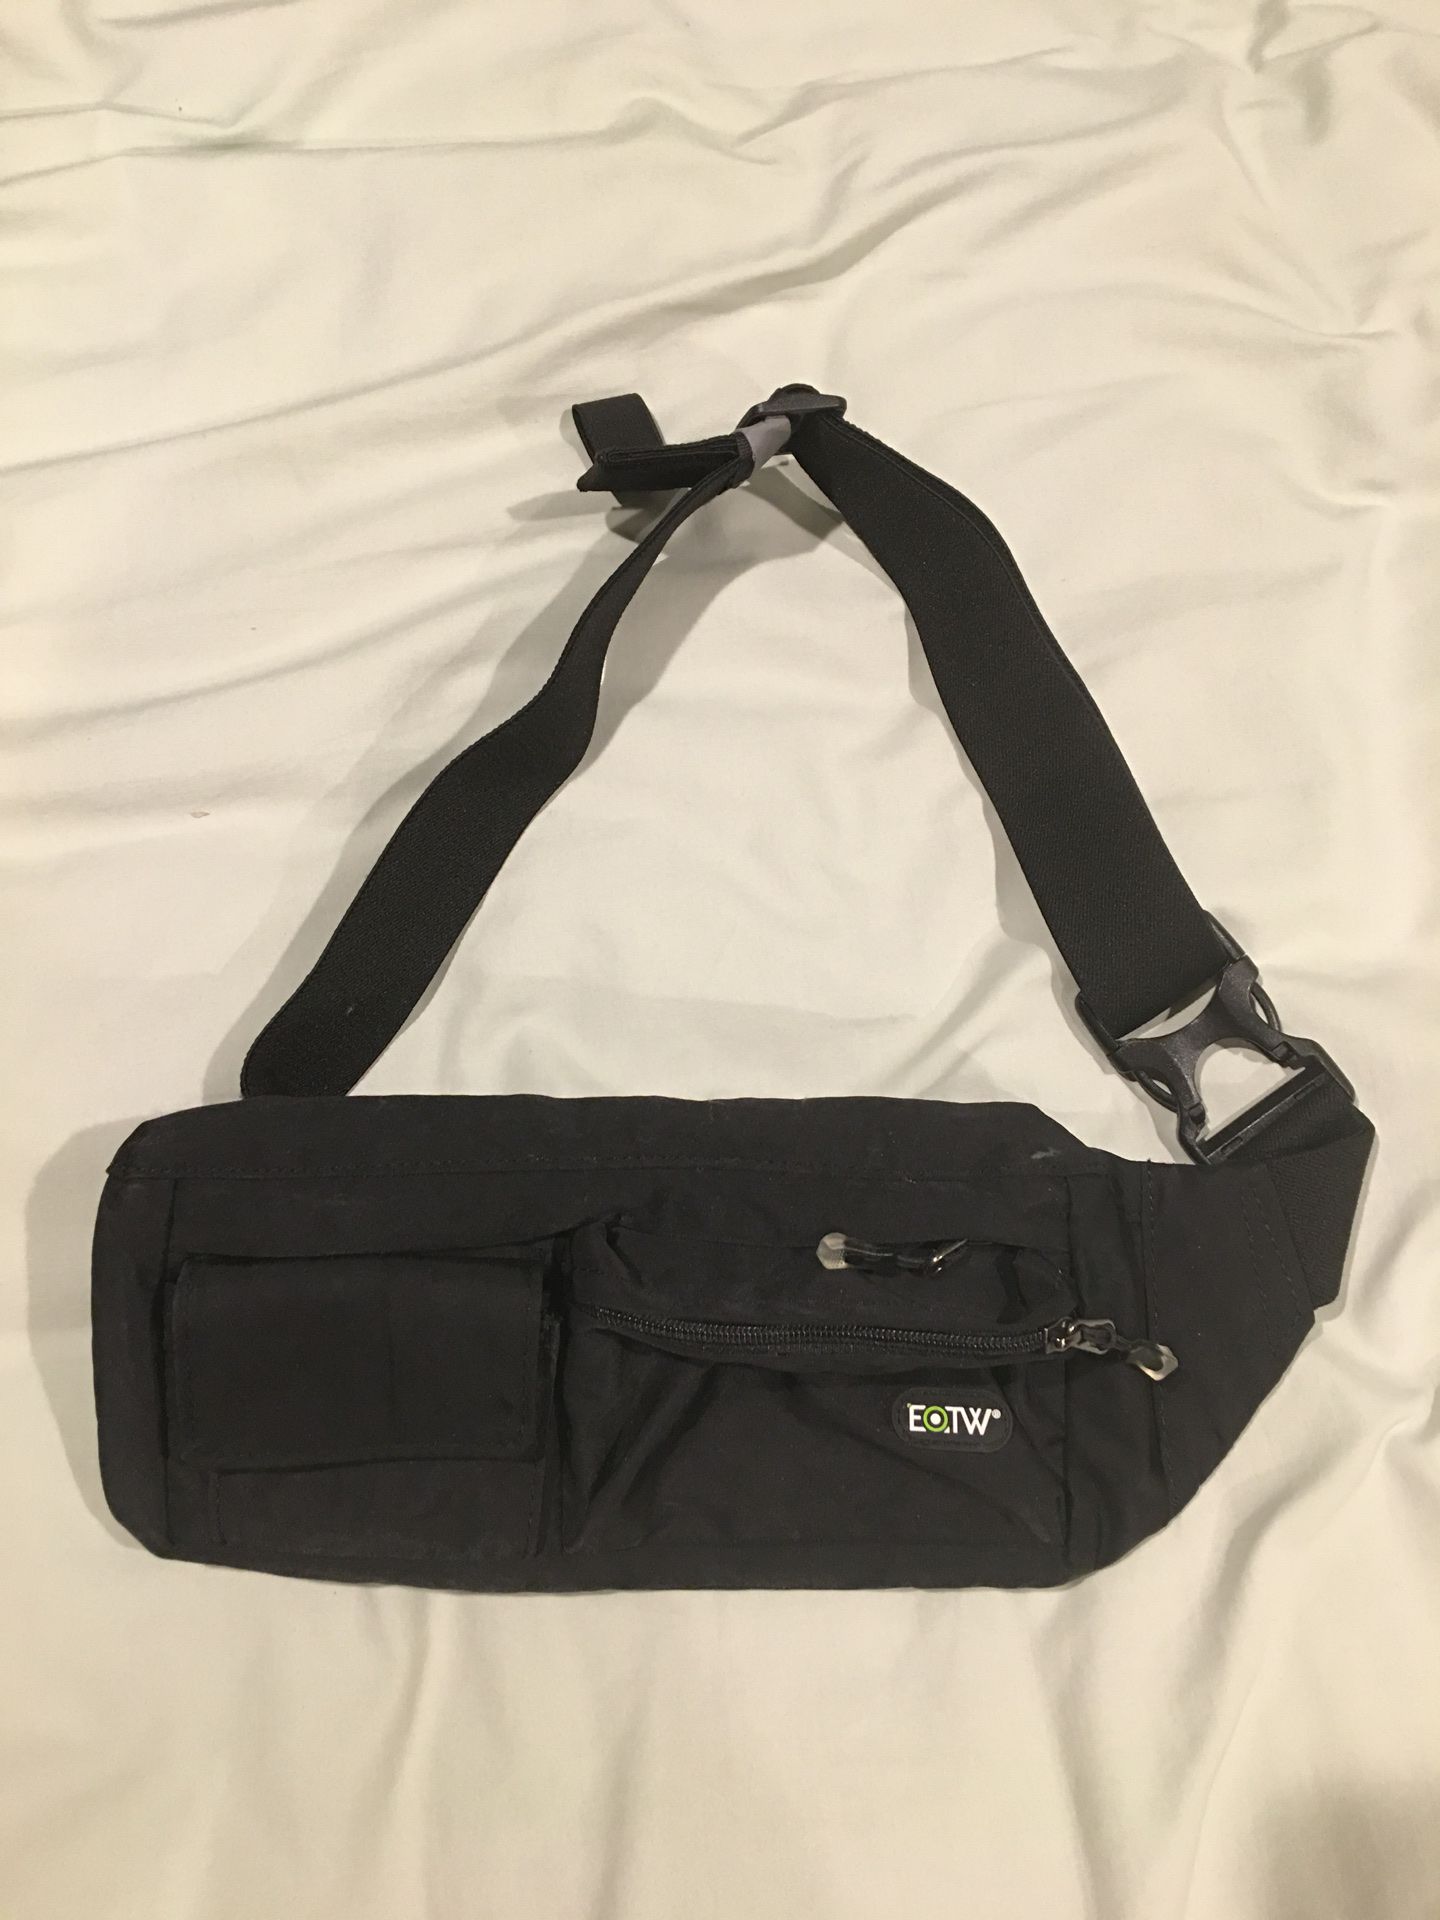 EOTW Fanny Pack Waist Bag Travel Pocket Chest Shoulder Bag Running Belt with Separate Pockets, Adjustable Band for Workout Vacation Hiking for iPhone